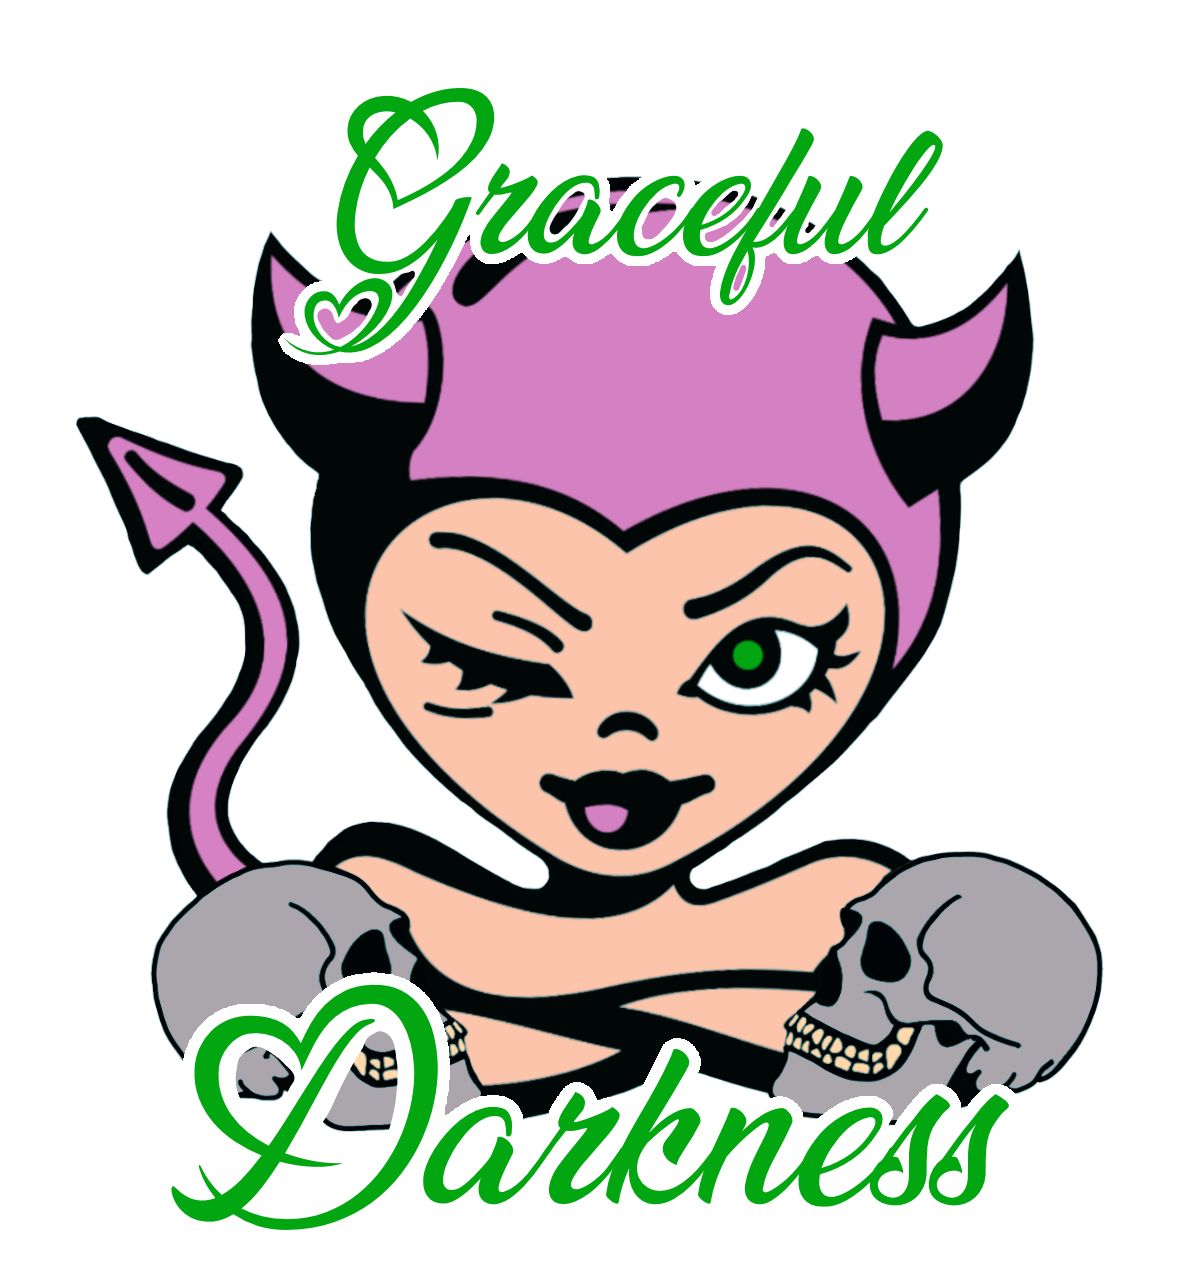 Graceful Darkness LLC